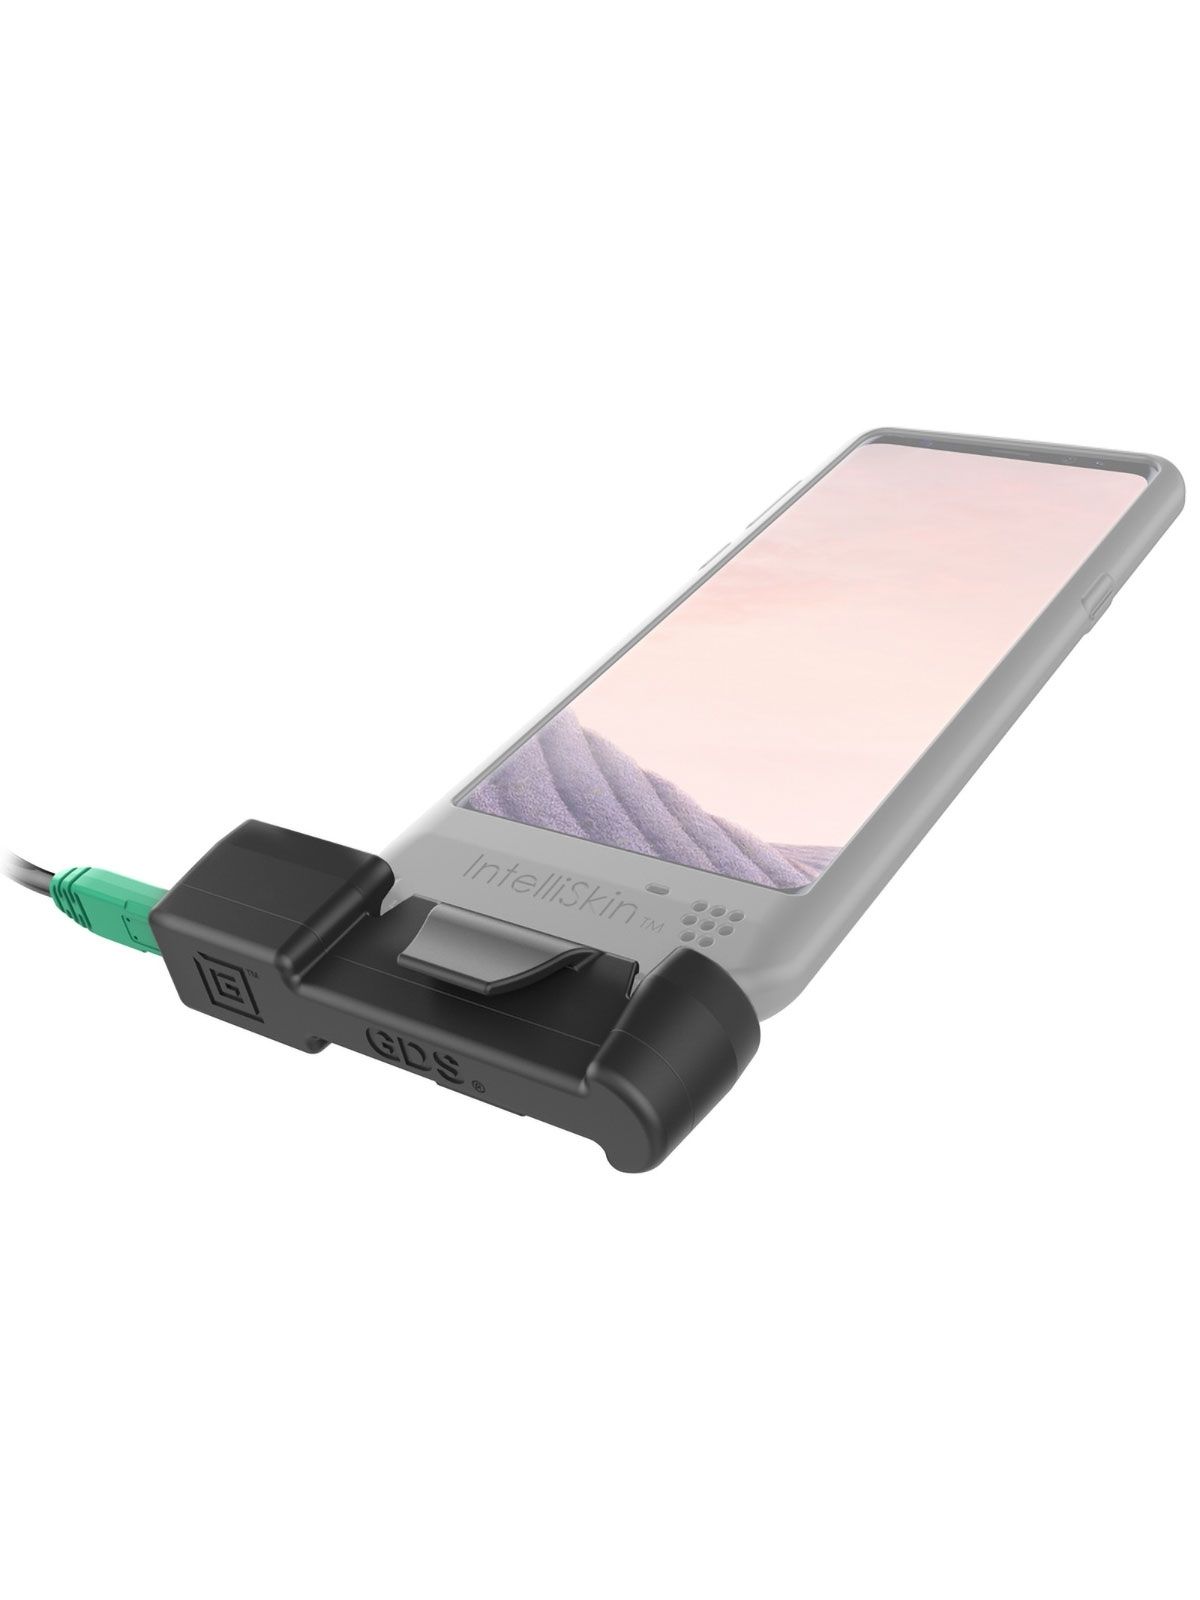 RAM Mounts GDS Snap-Con Ladesockel für IntelliSkin-Lade-/Schutzhüllen - USB-C, inkl. Kabel